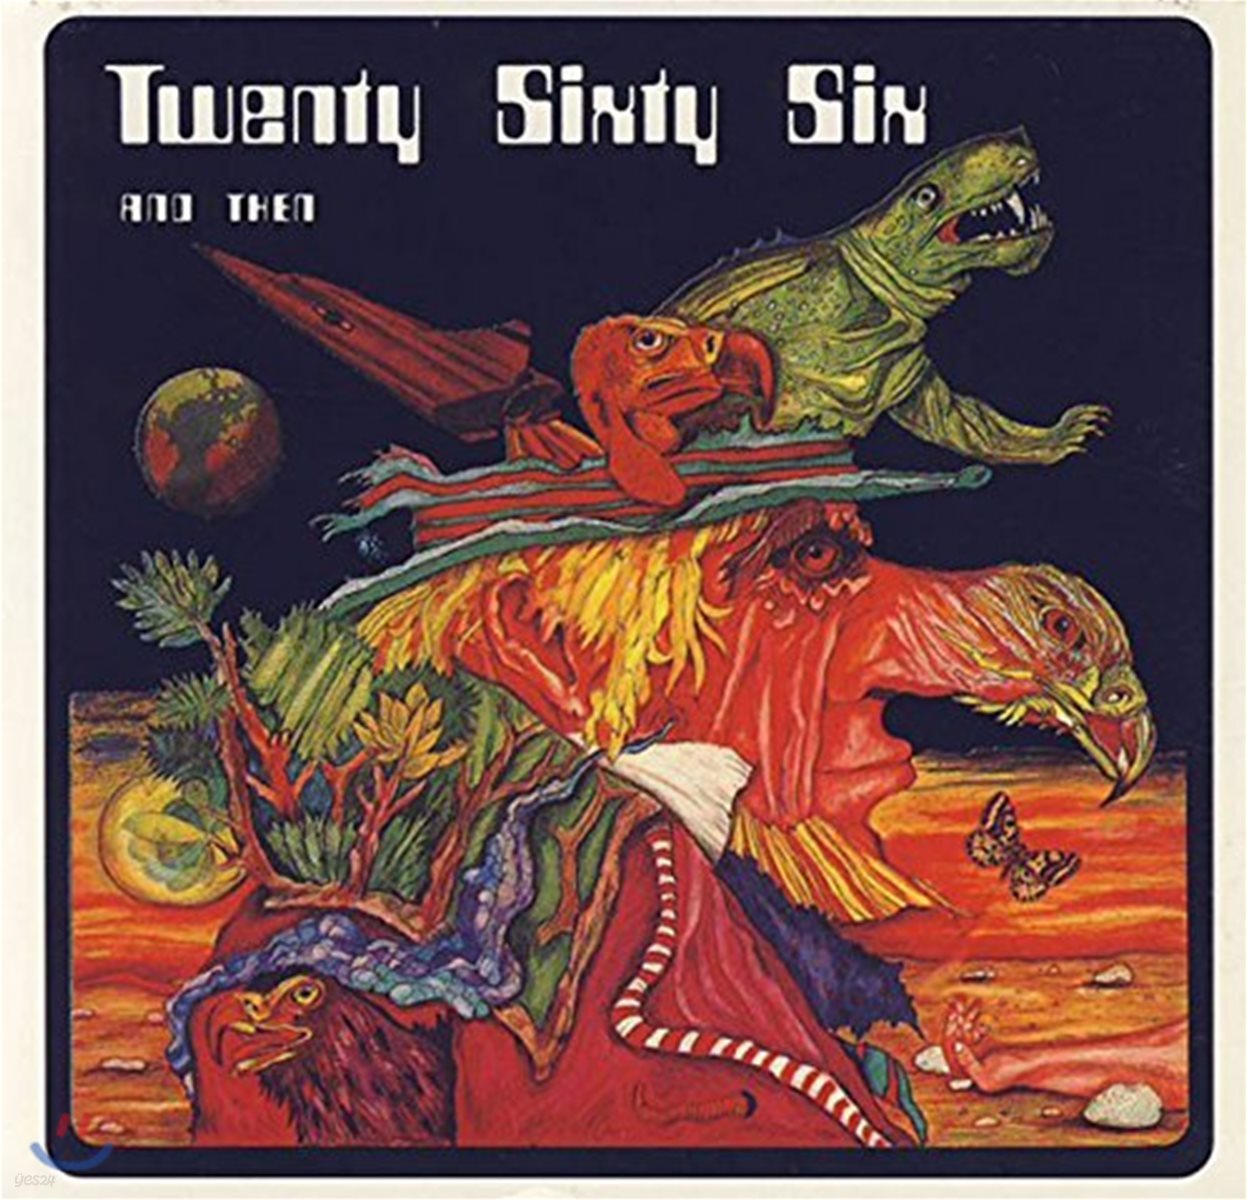 Twenty Sixty Six And Then (트웬티 식스티 식스 앤 덴) - Reflections On The Future [LP]